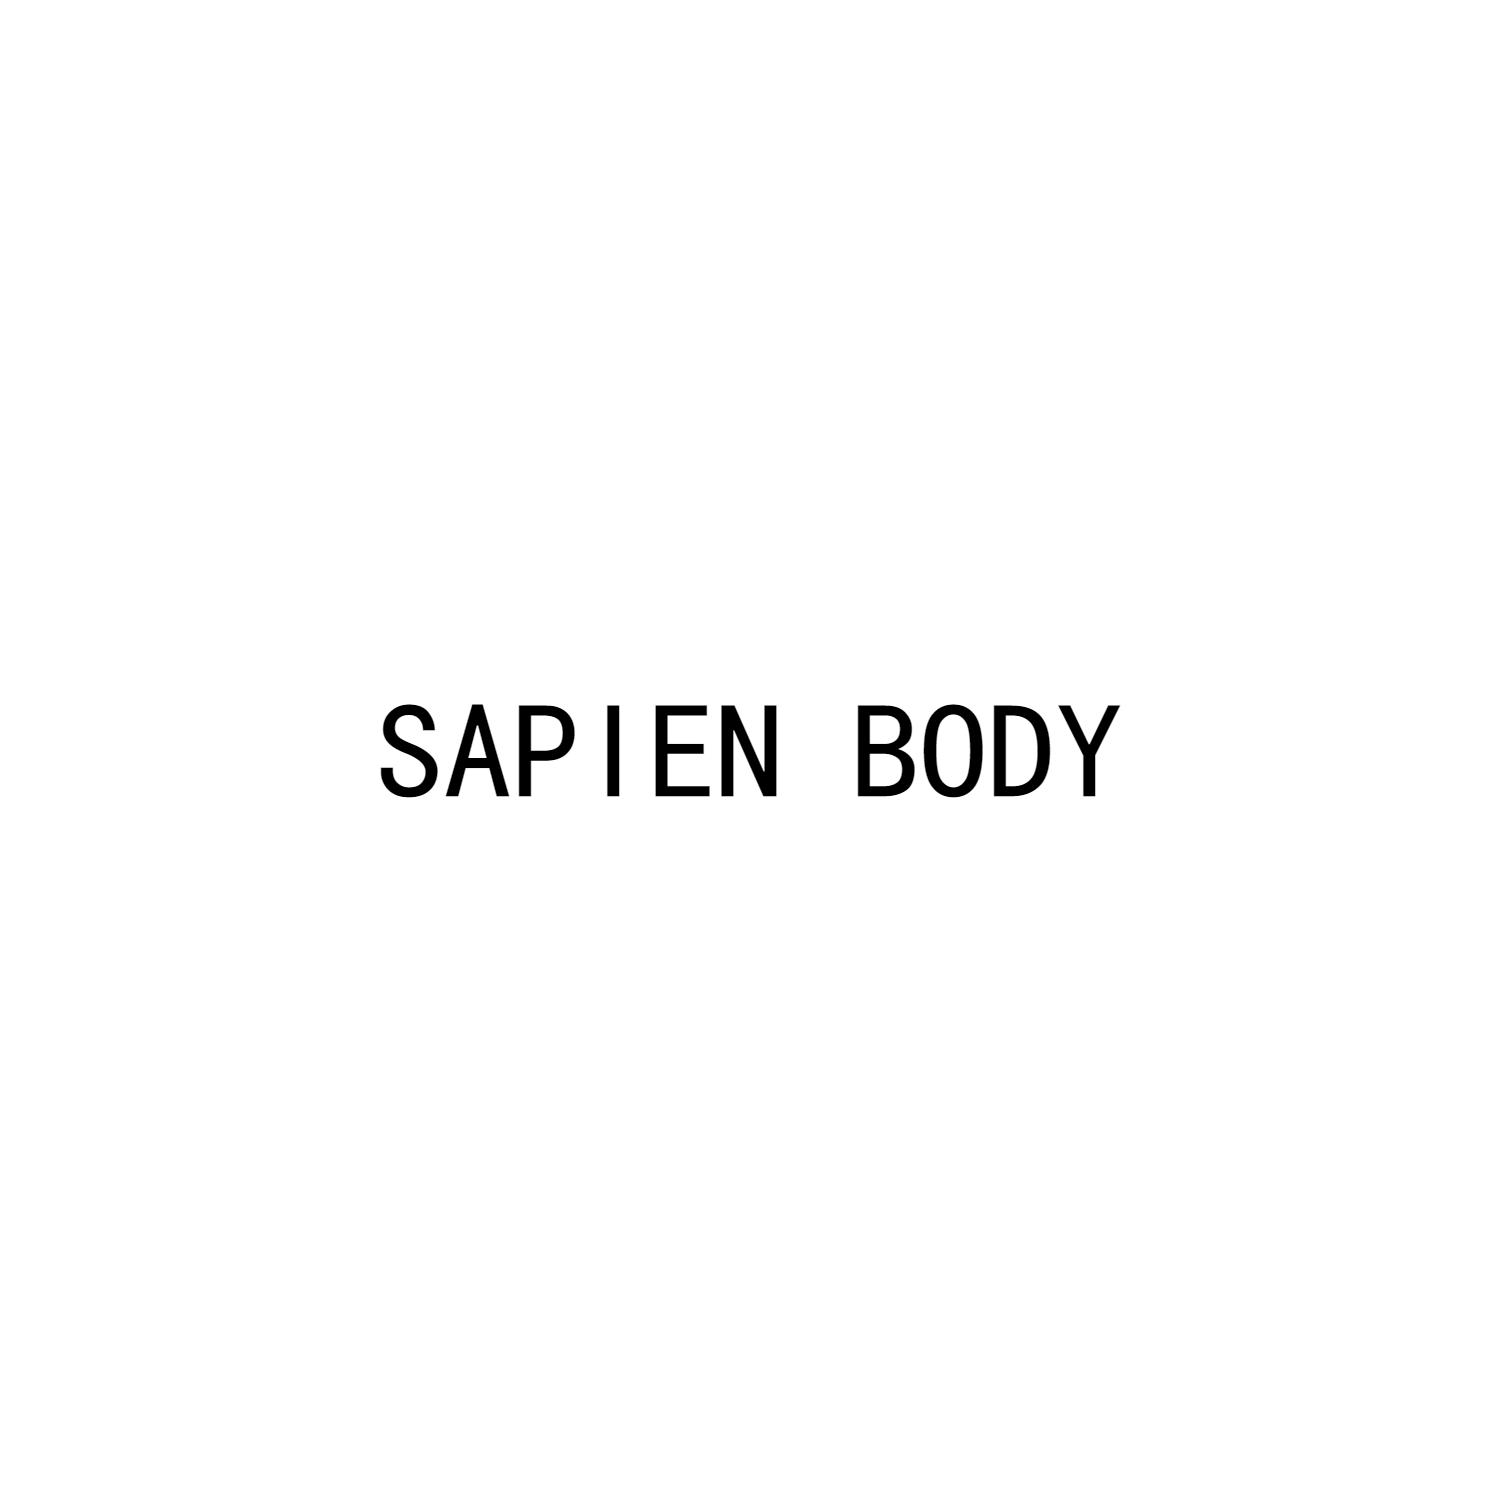 SAPIEN BODY